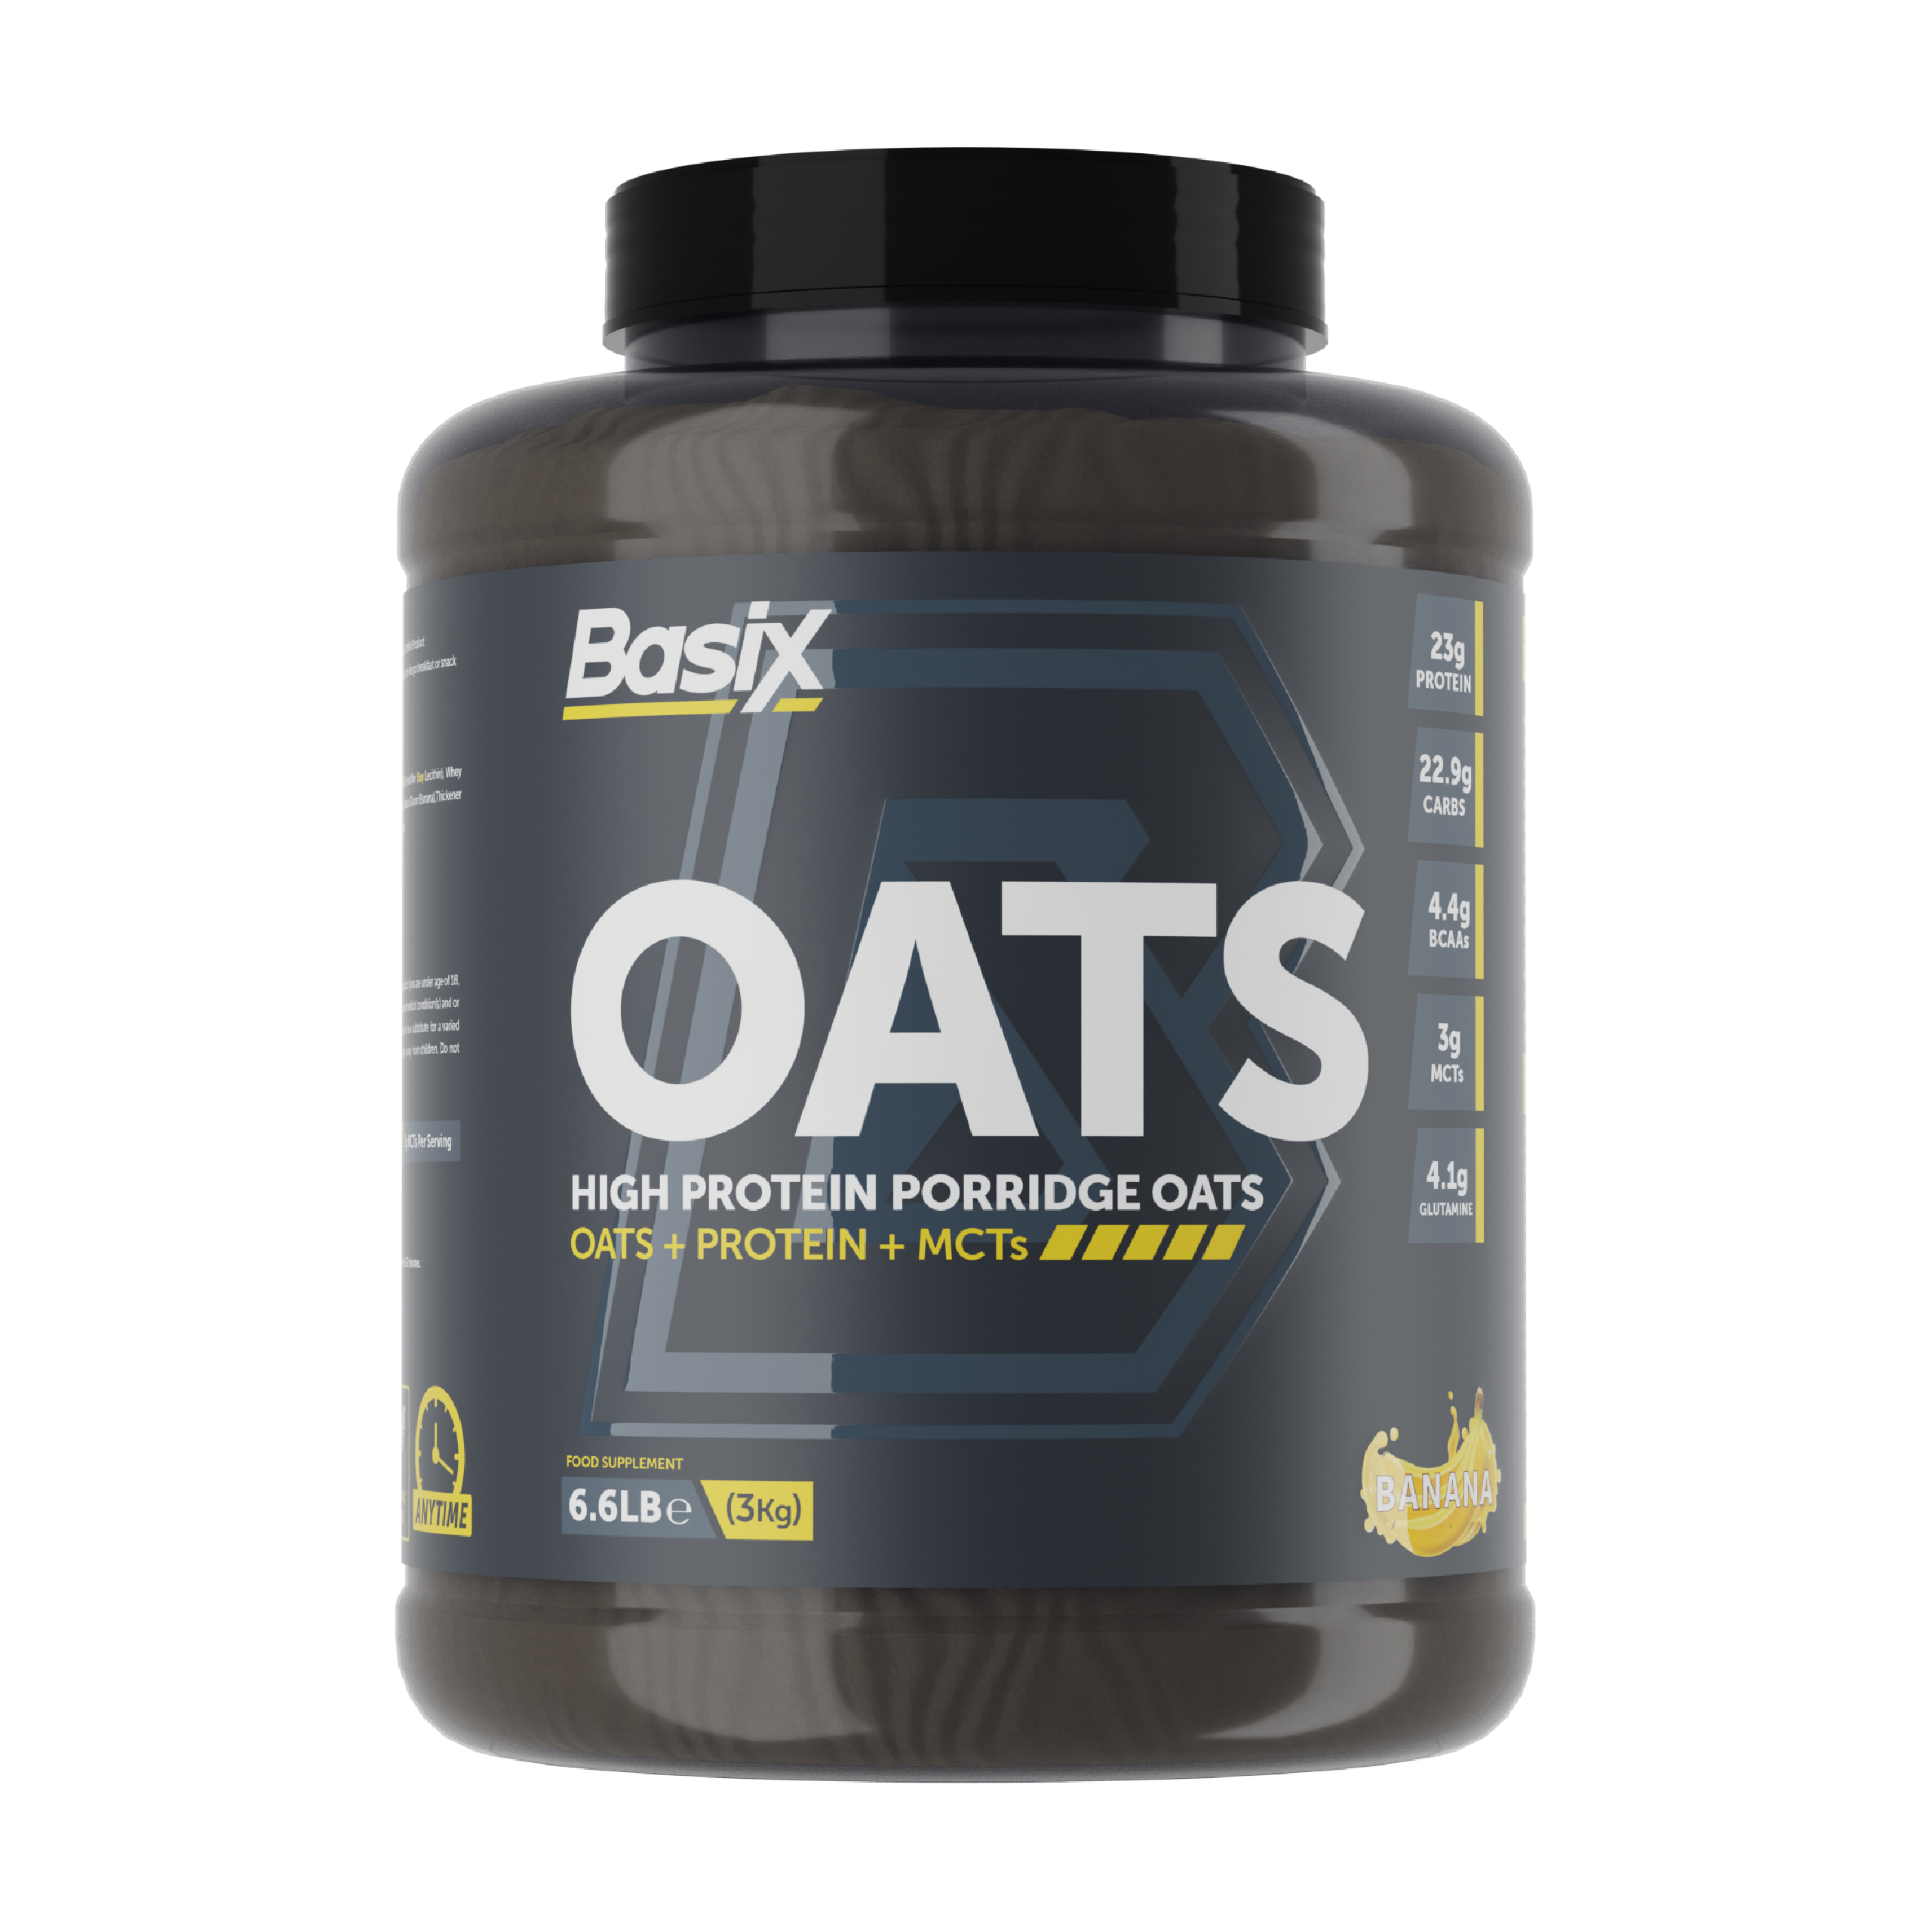 Basix protein oats